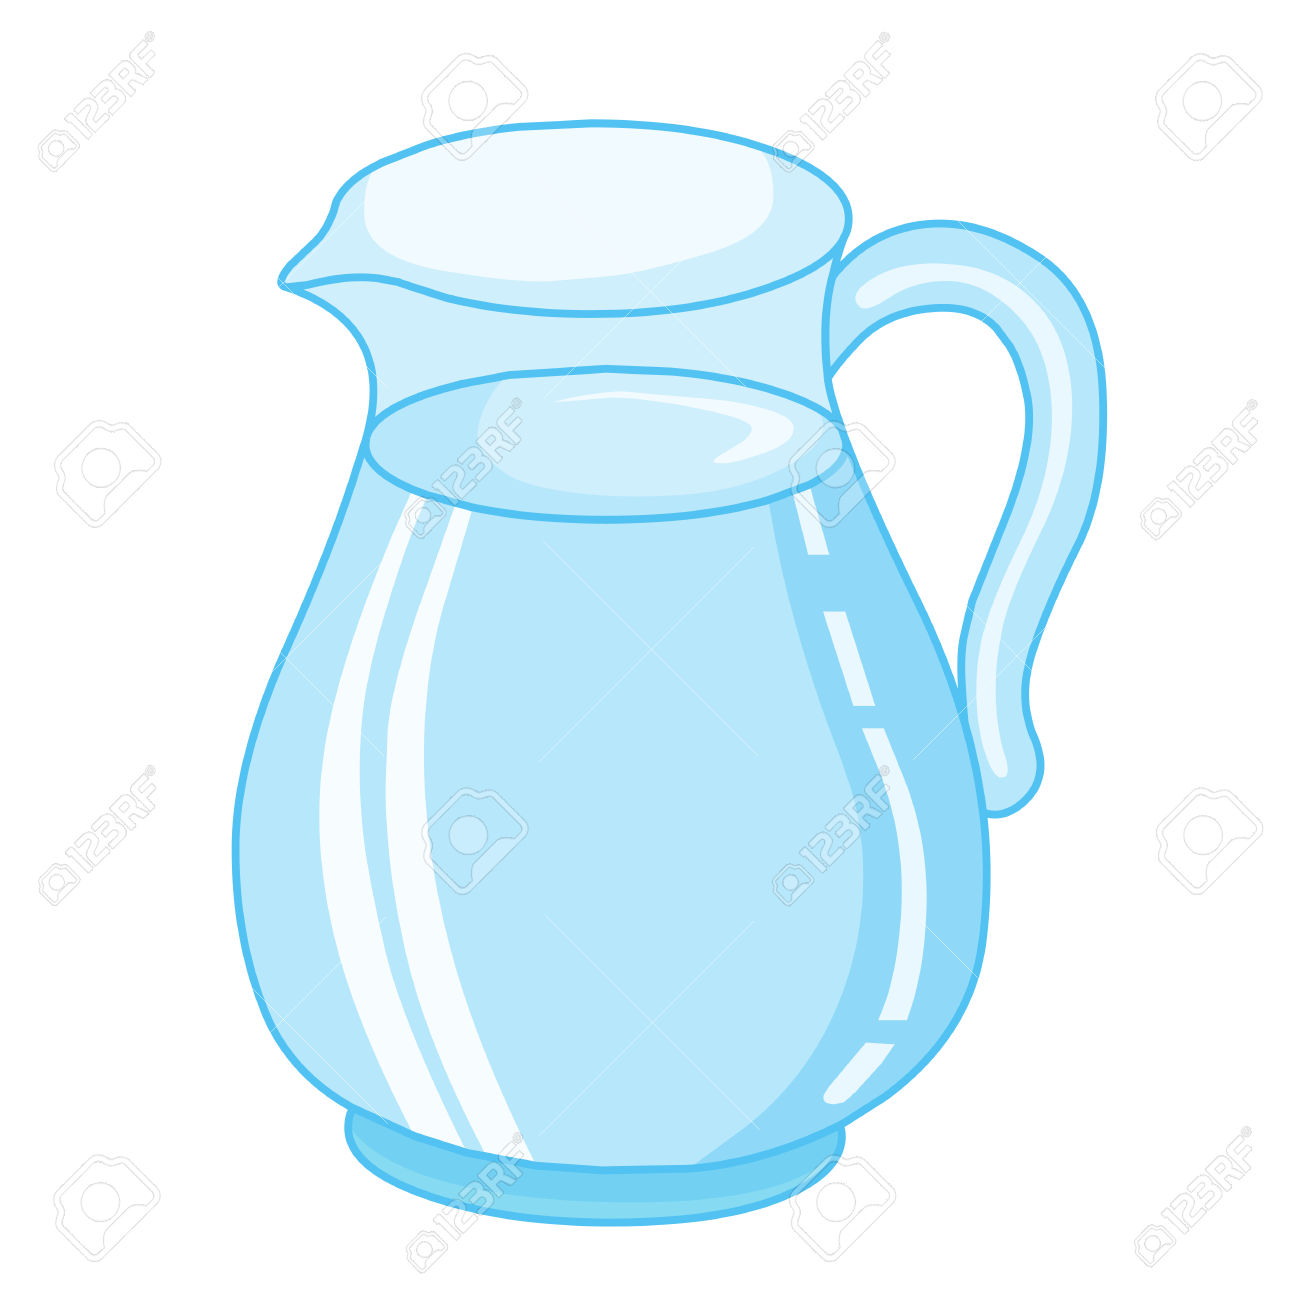 jar clipart water jar